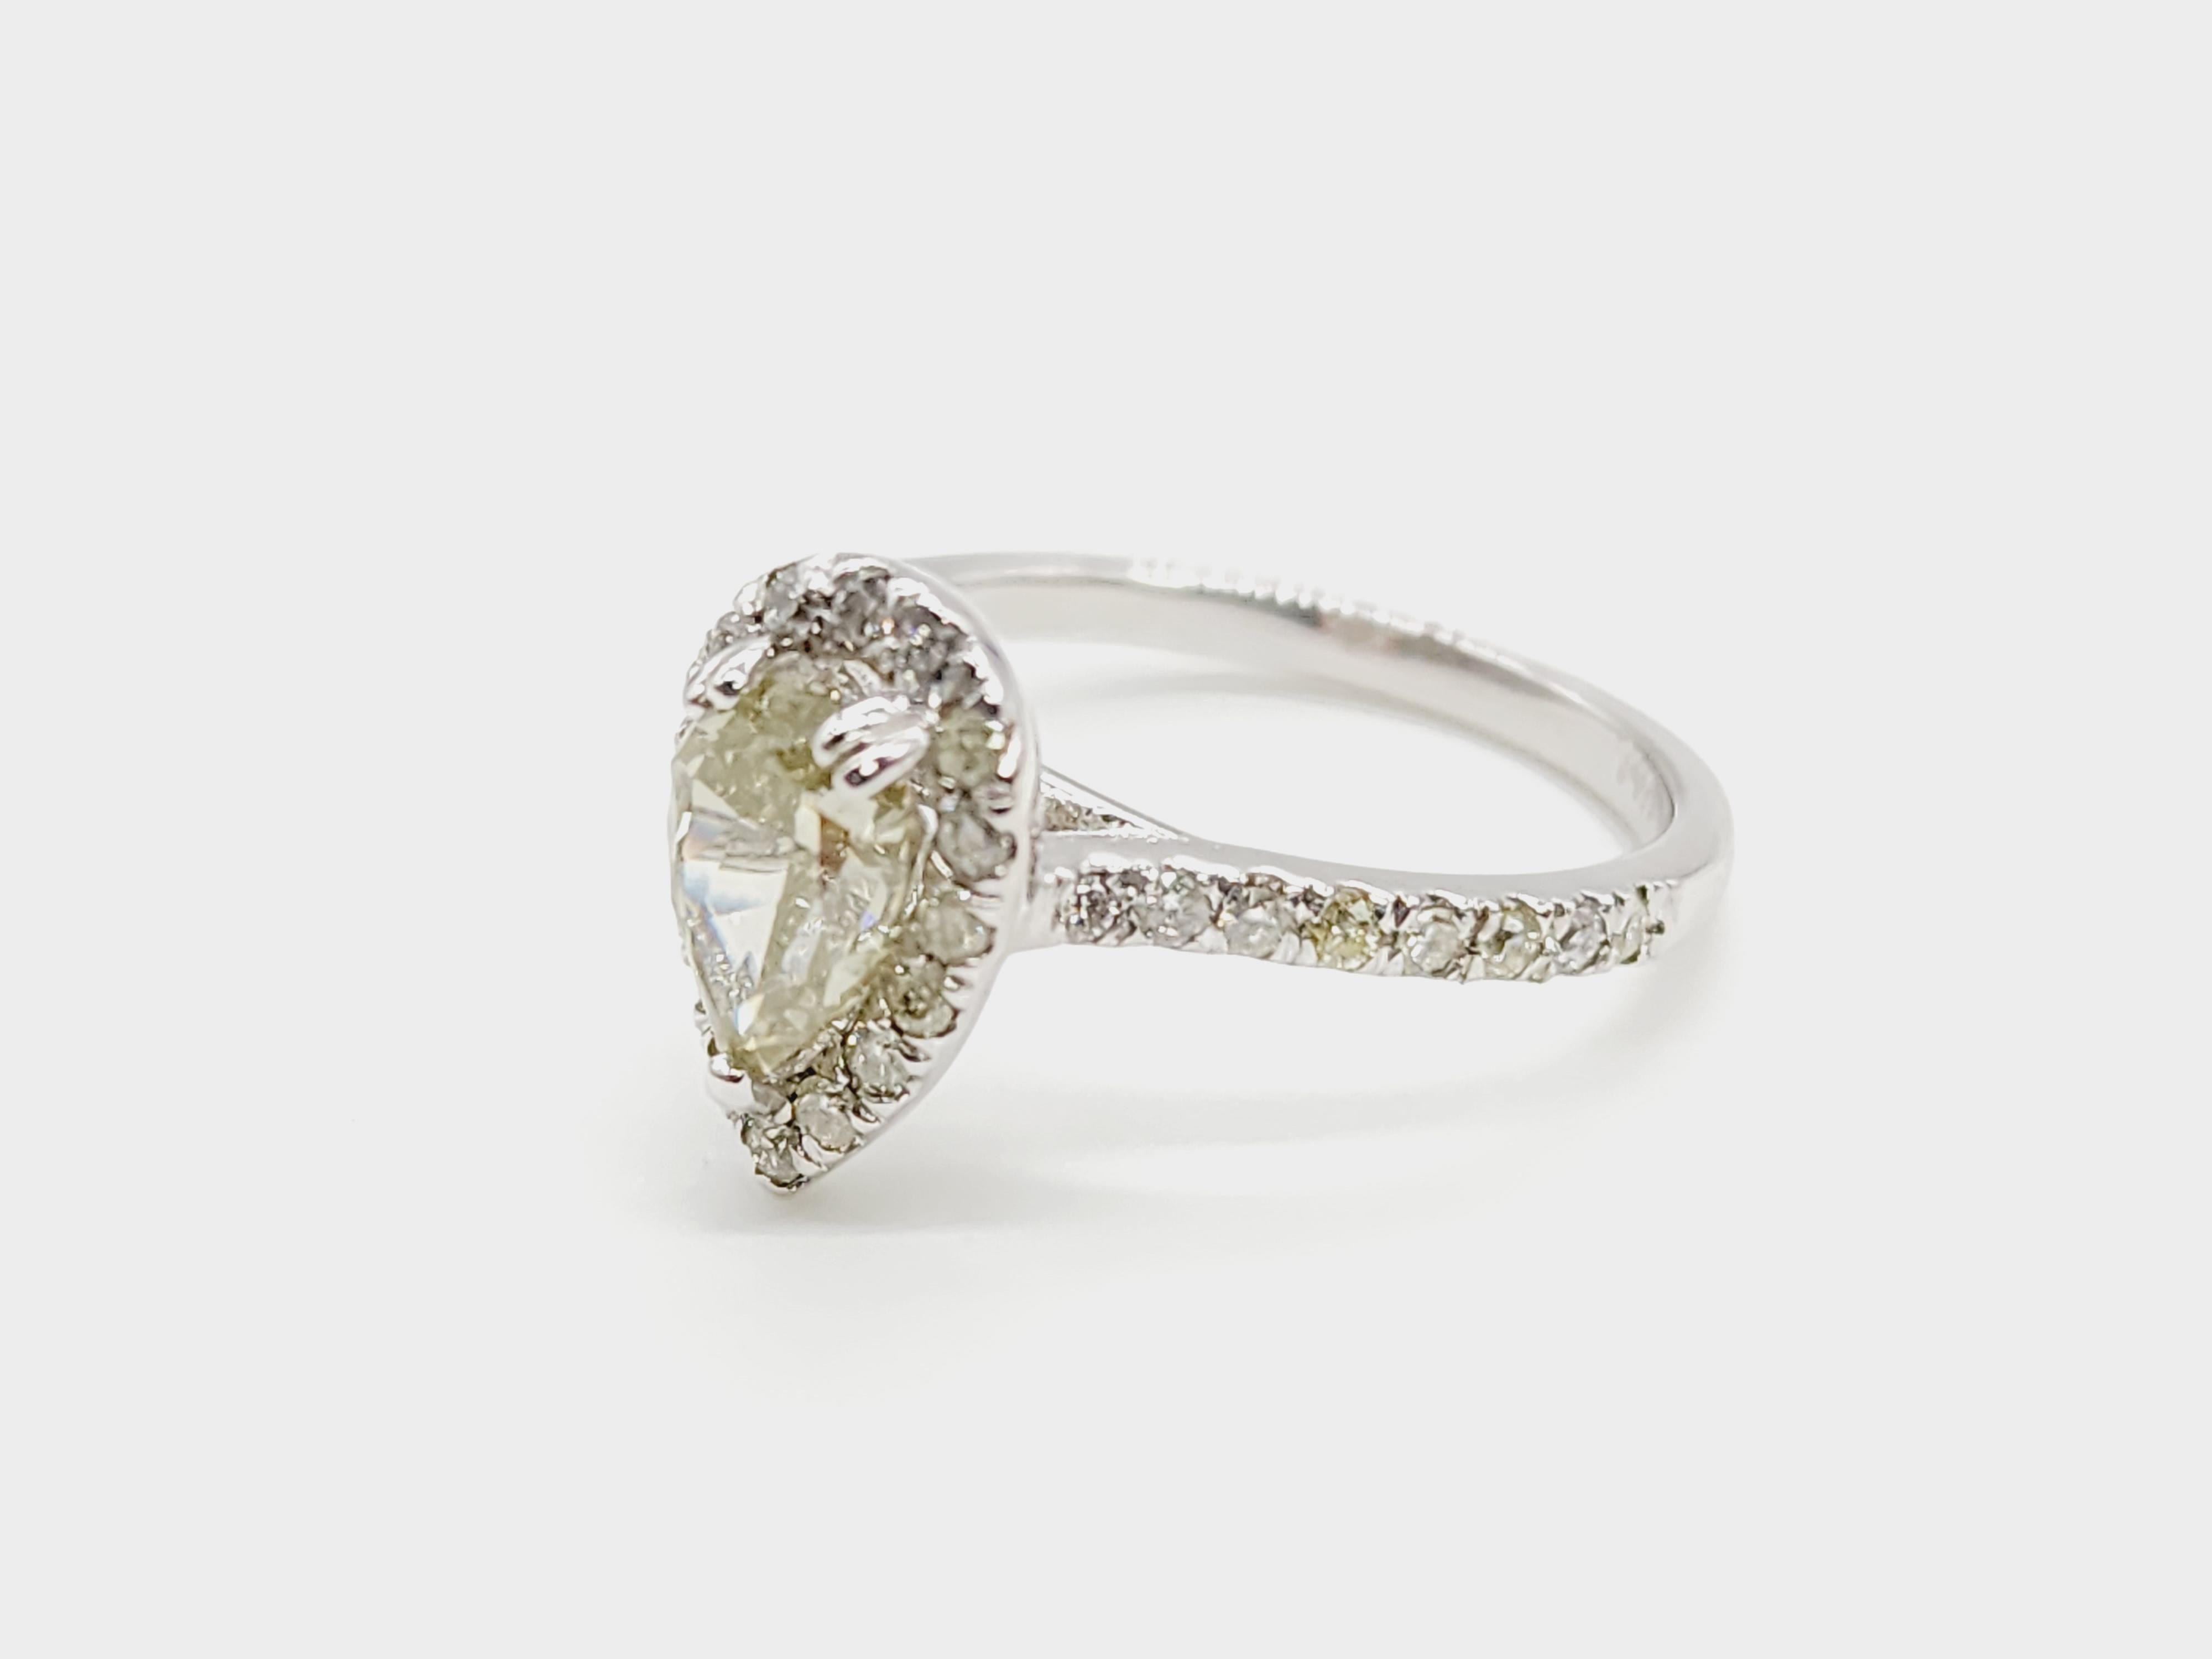 GIA CHAMELEON 1.11 Carat Pear Shape Fancy Yellow Diamond Ring 14K White Gold 1